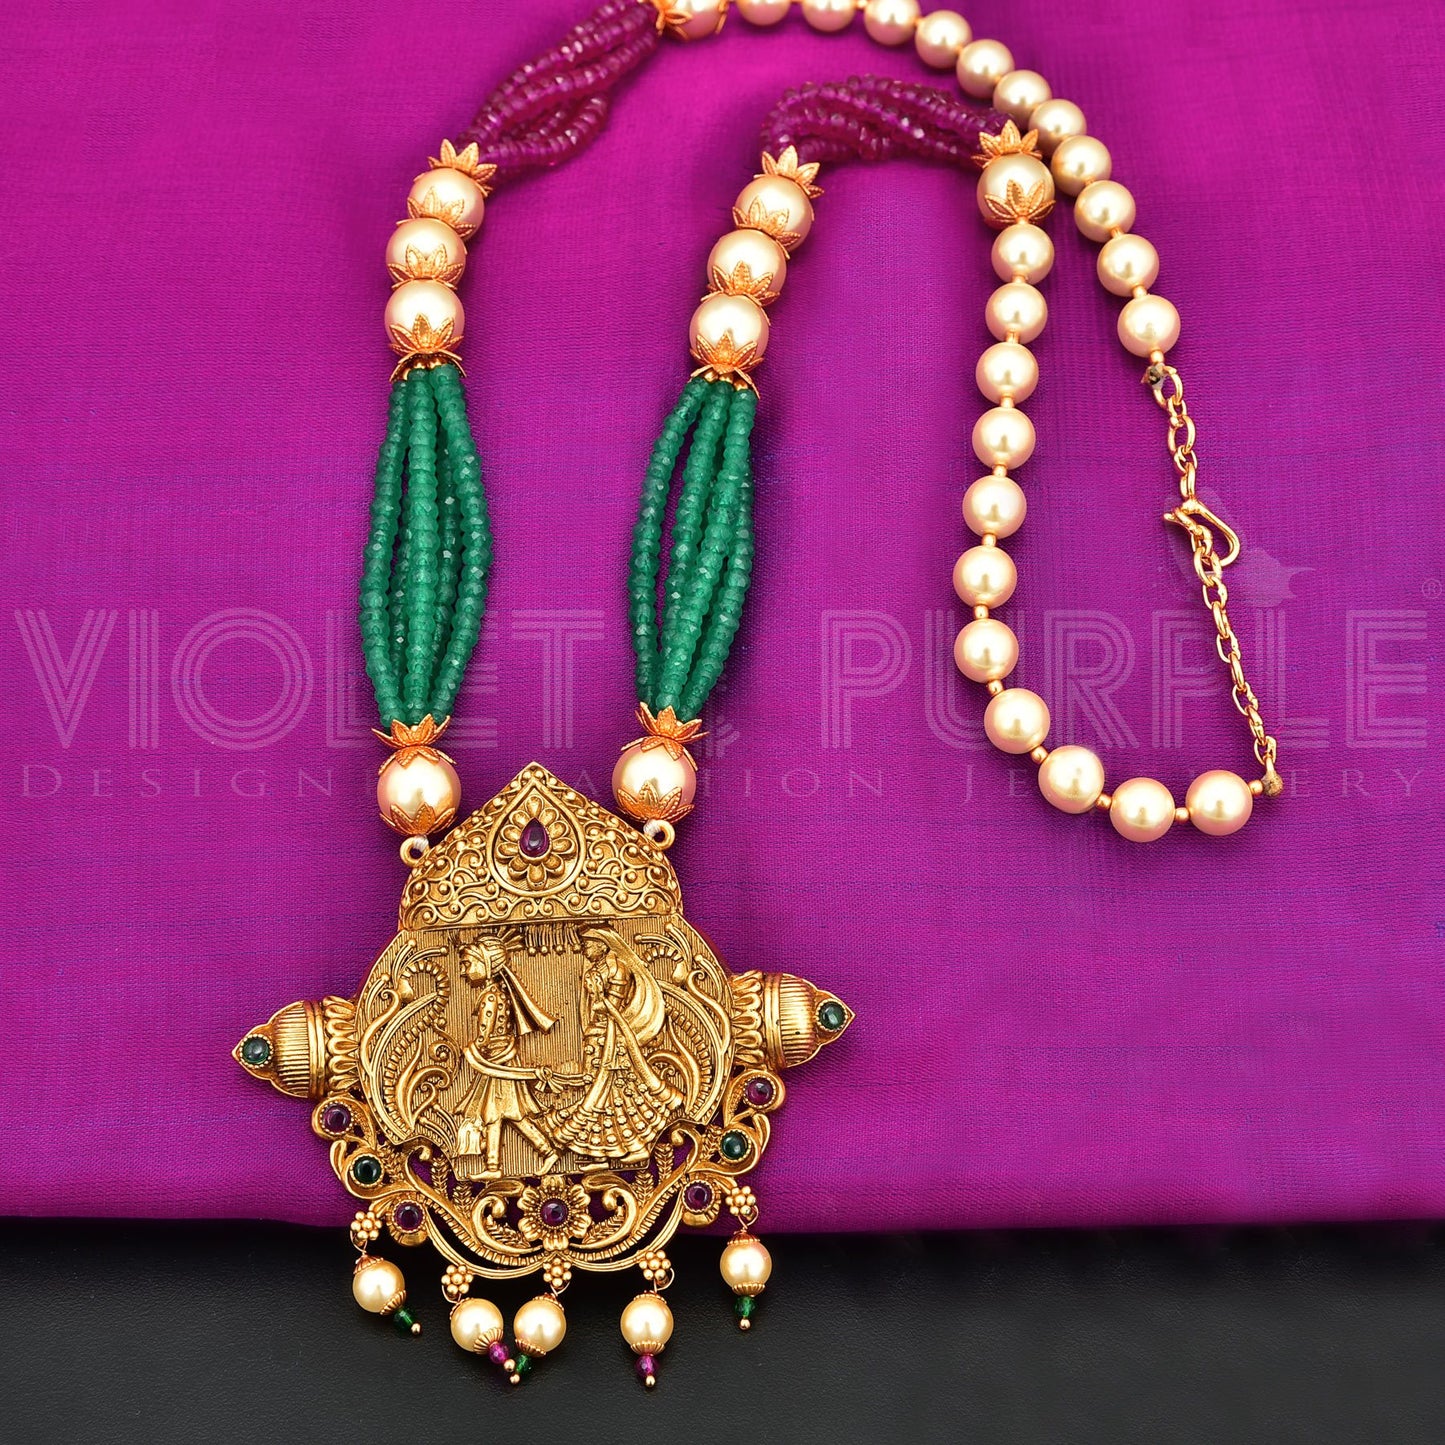 Designer Bridal Beads Chain Pendant